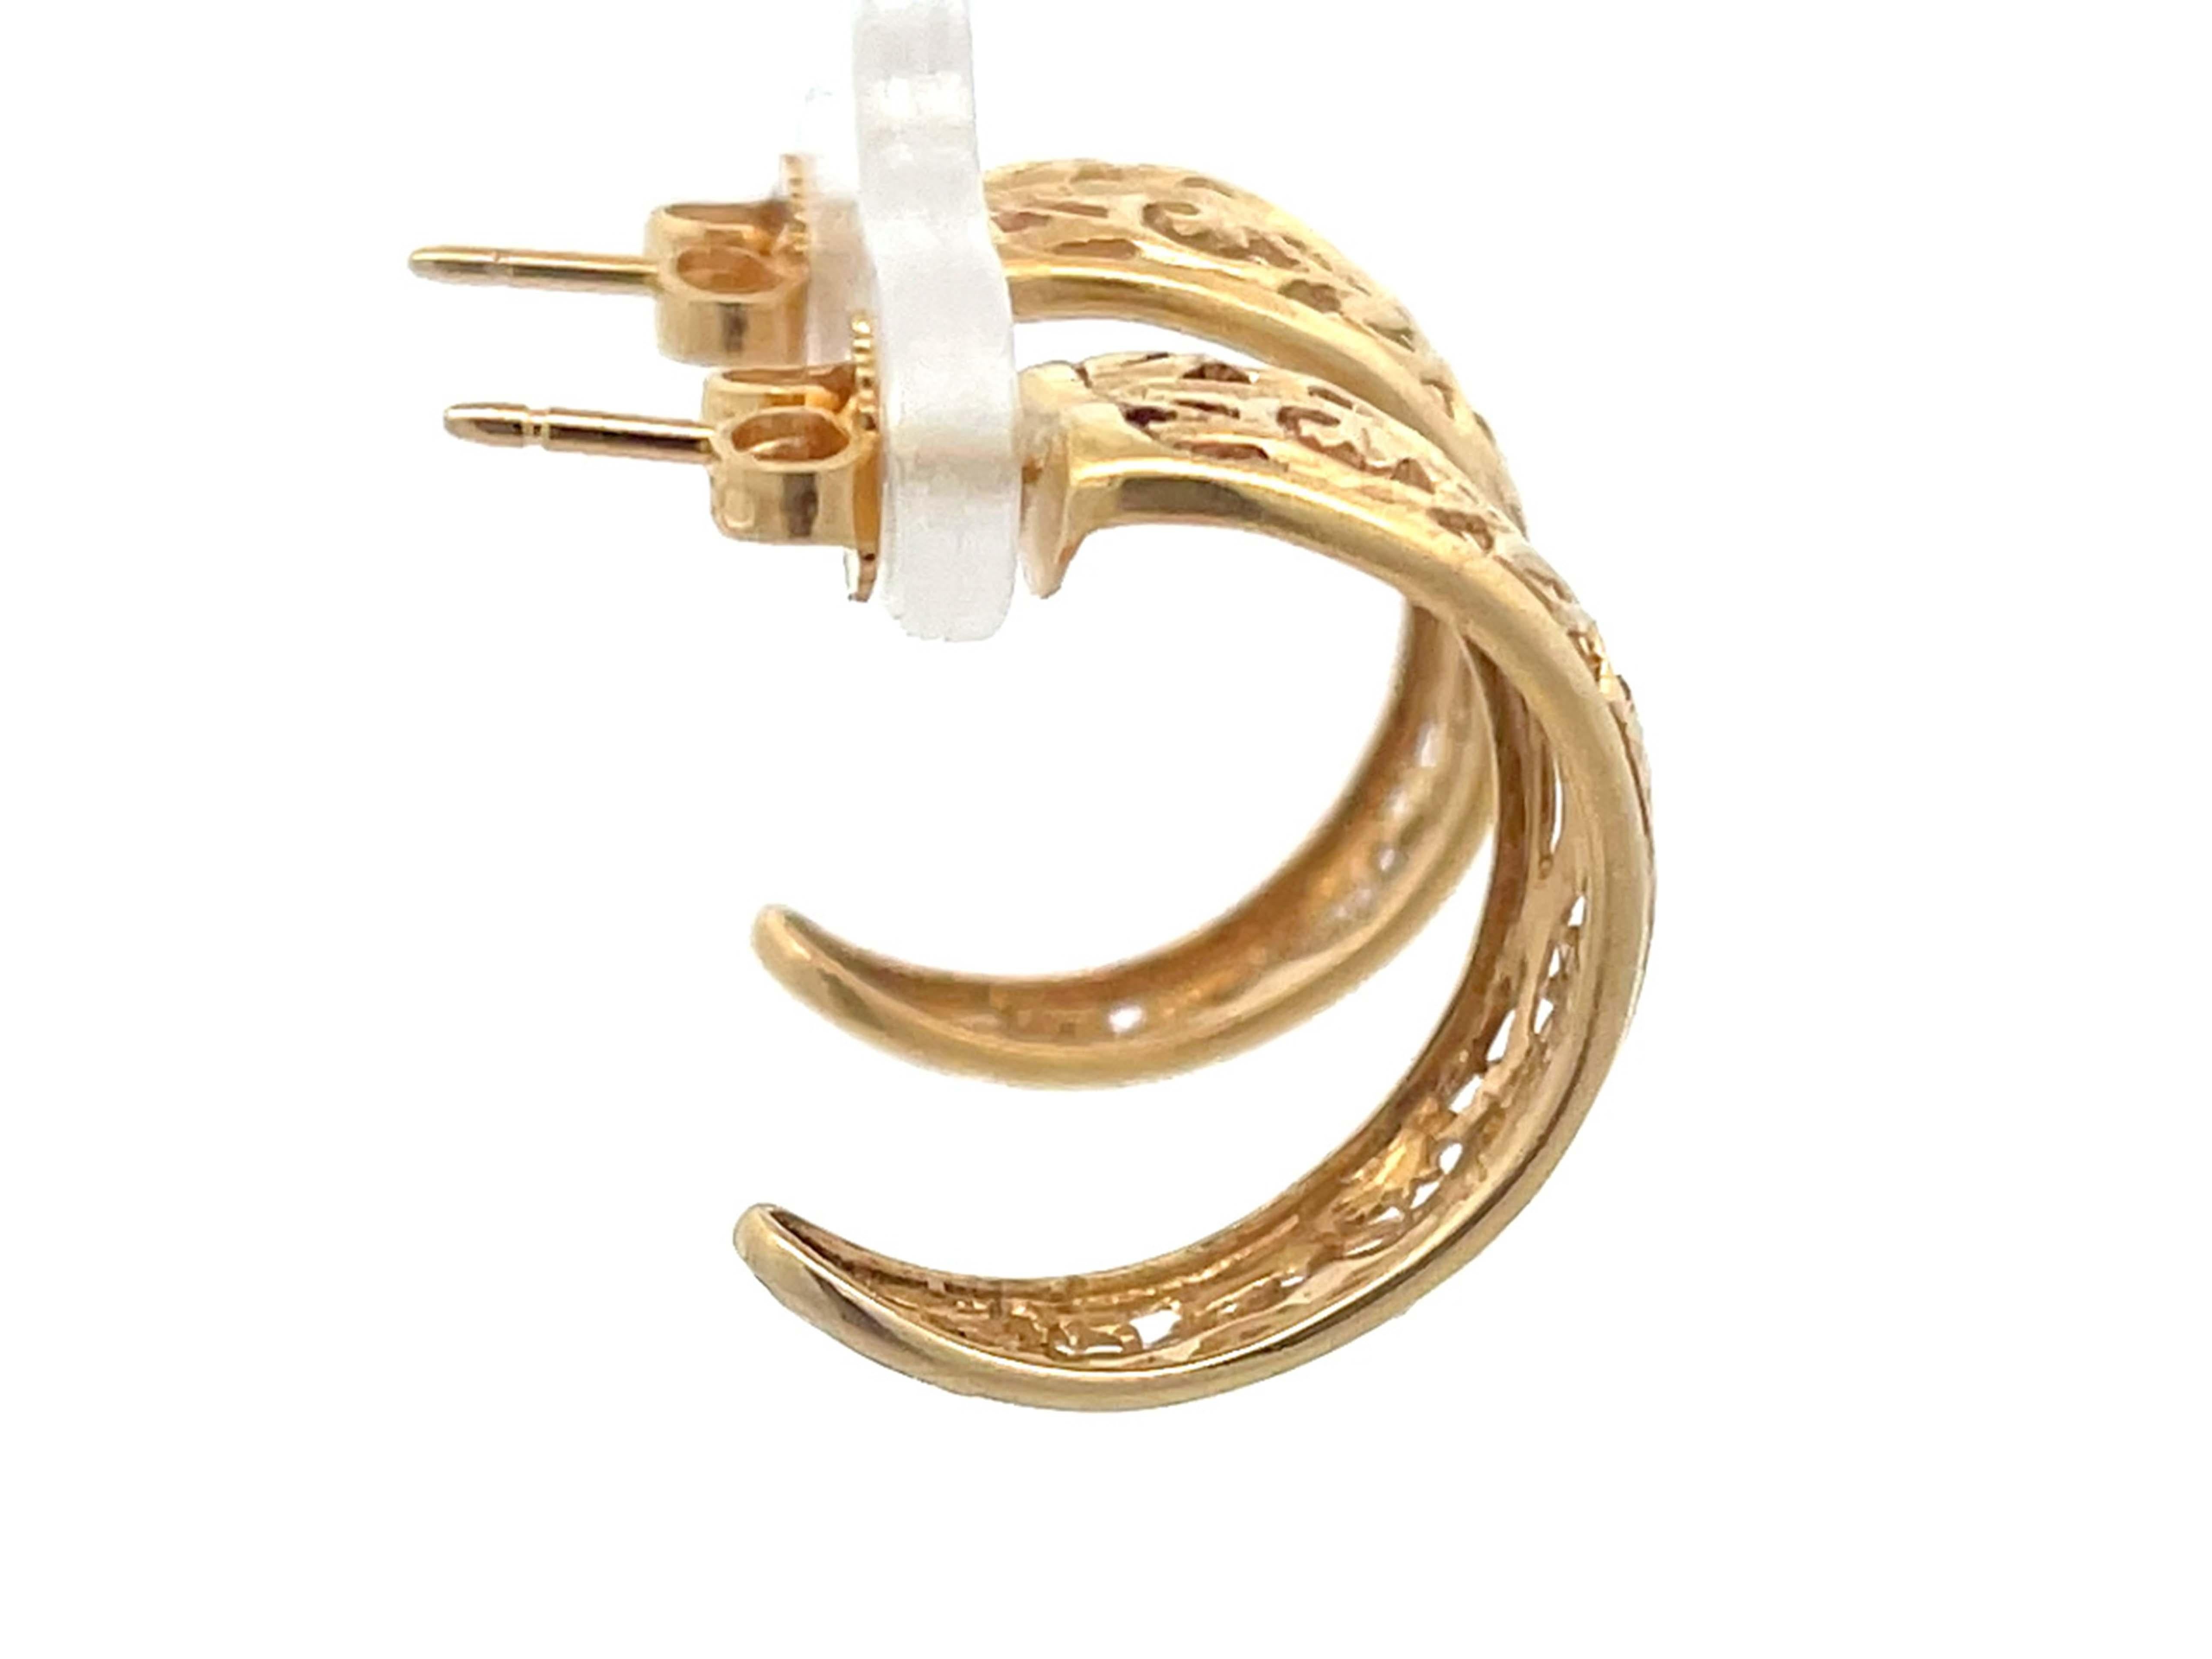 Mings Pierced Scroll Design Wide Half Hoop Earrings in 14k Yellow Gold In Excellent Condition For Sale In Honolulu, HI